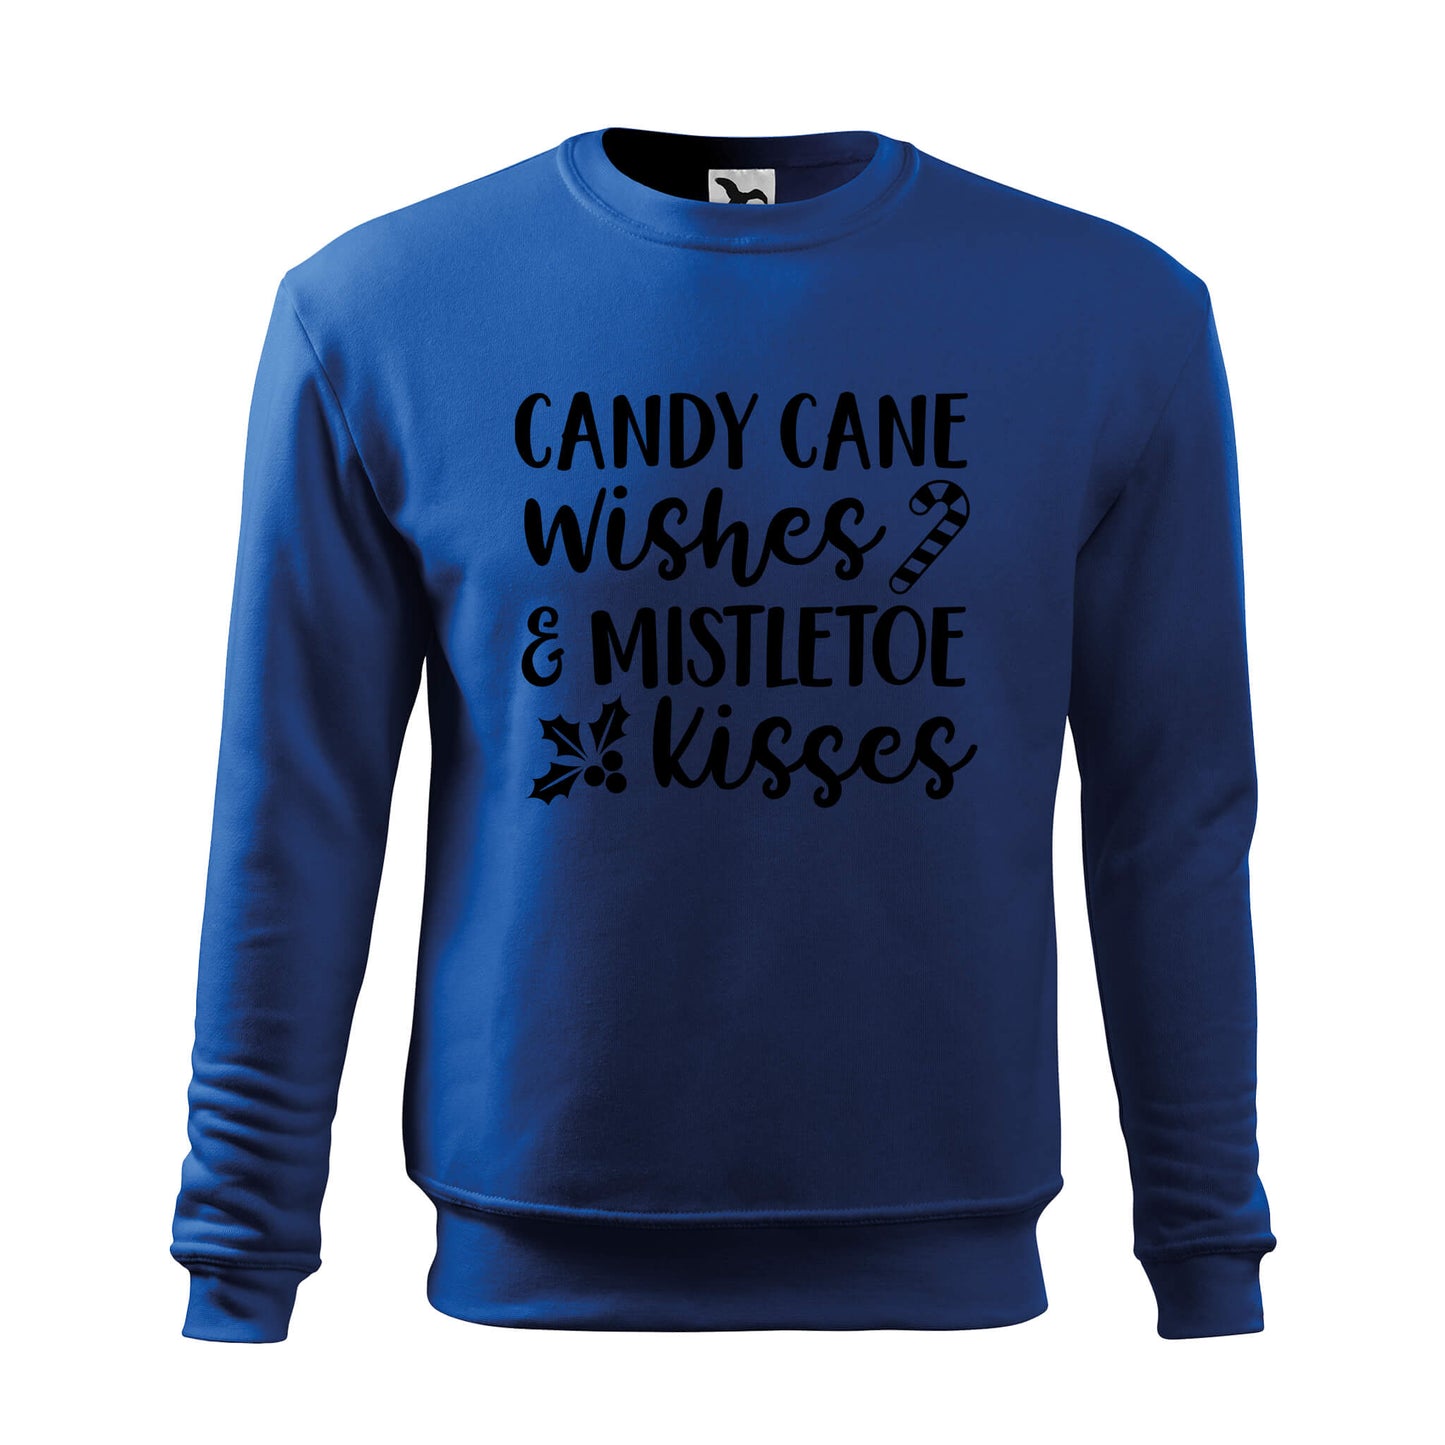 Candy cane wishes mistletoe kisses sweatshirt - rvdesignprint